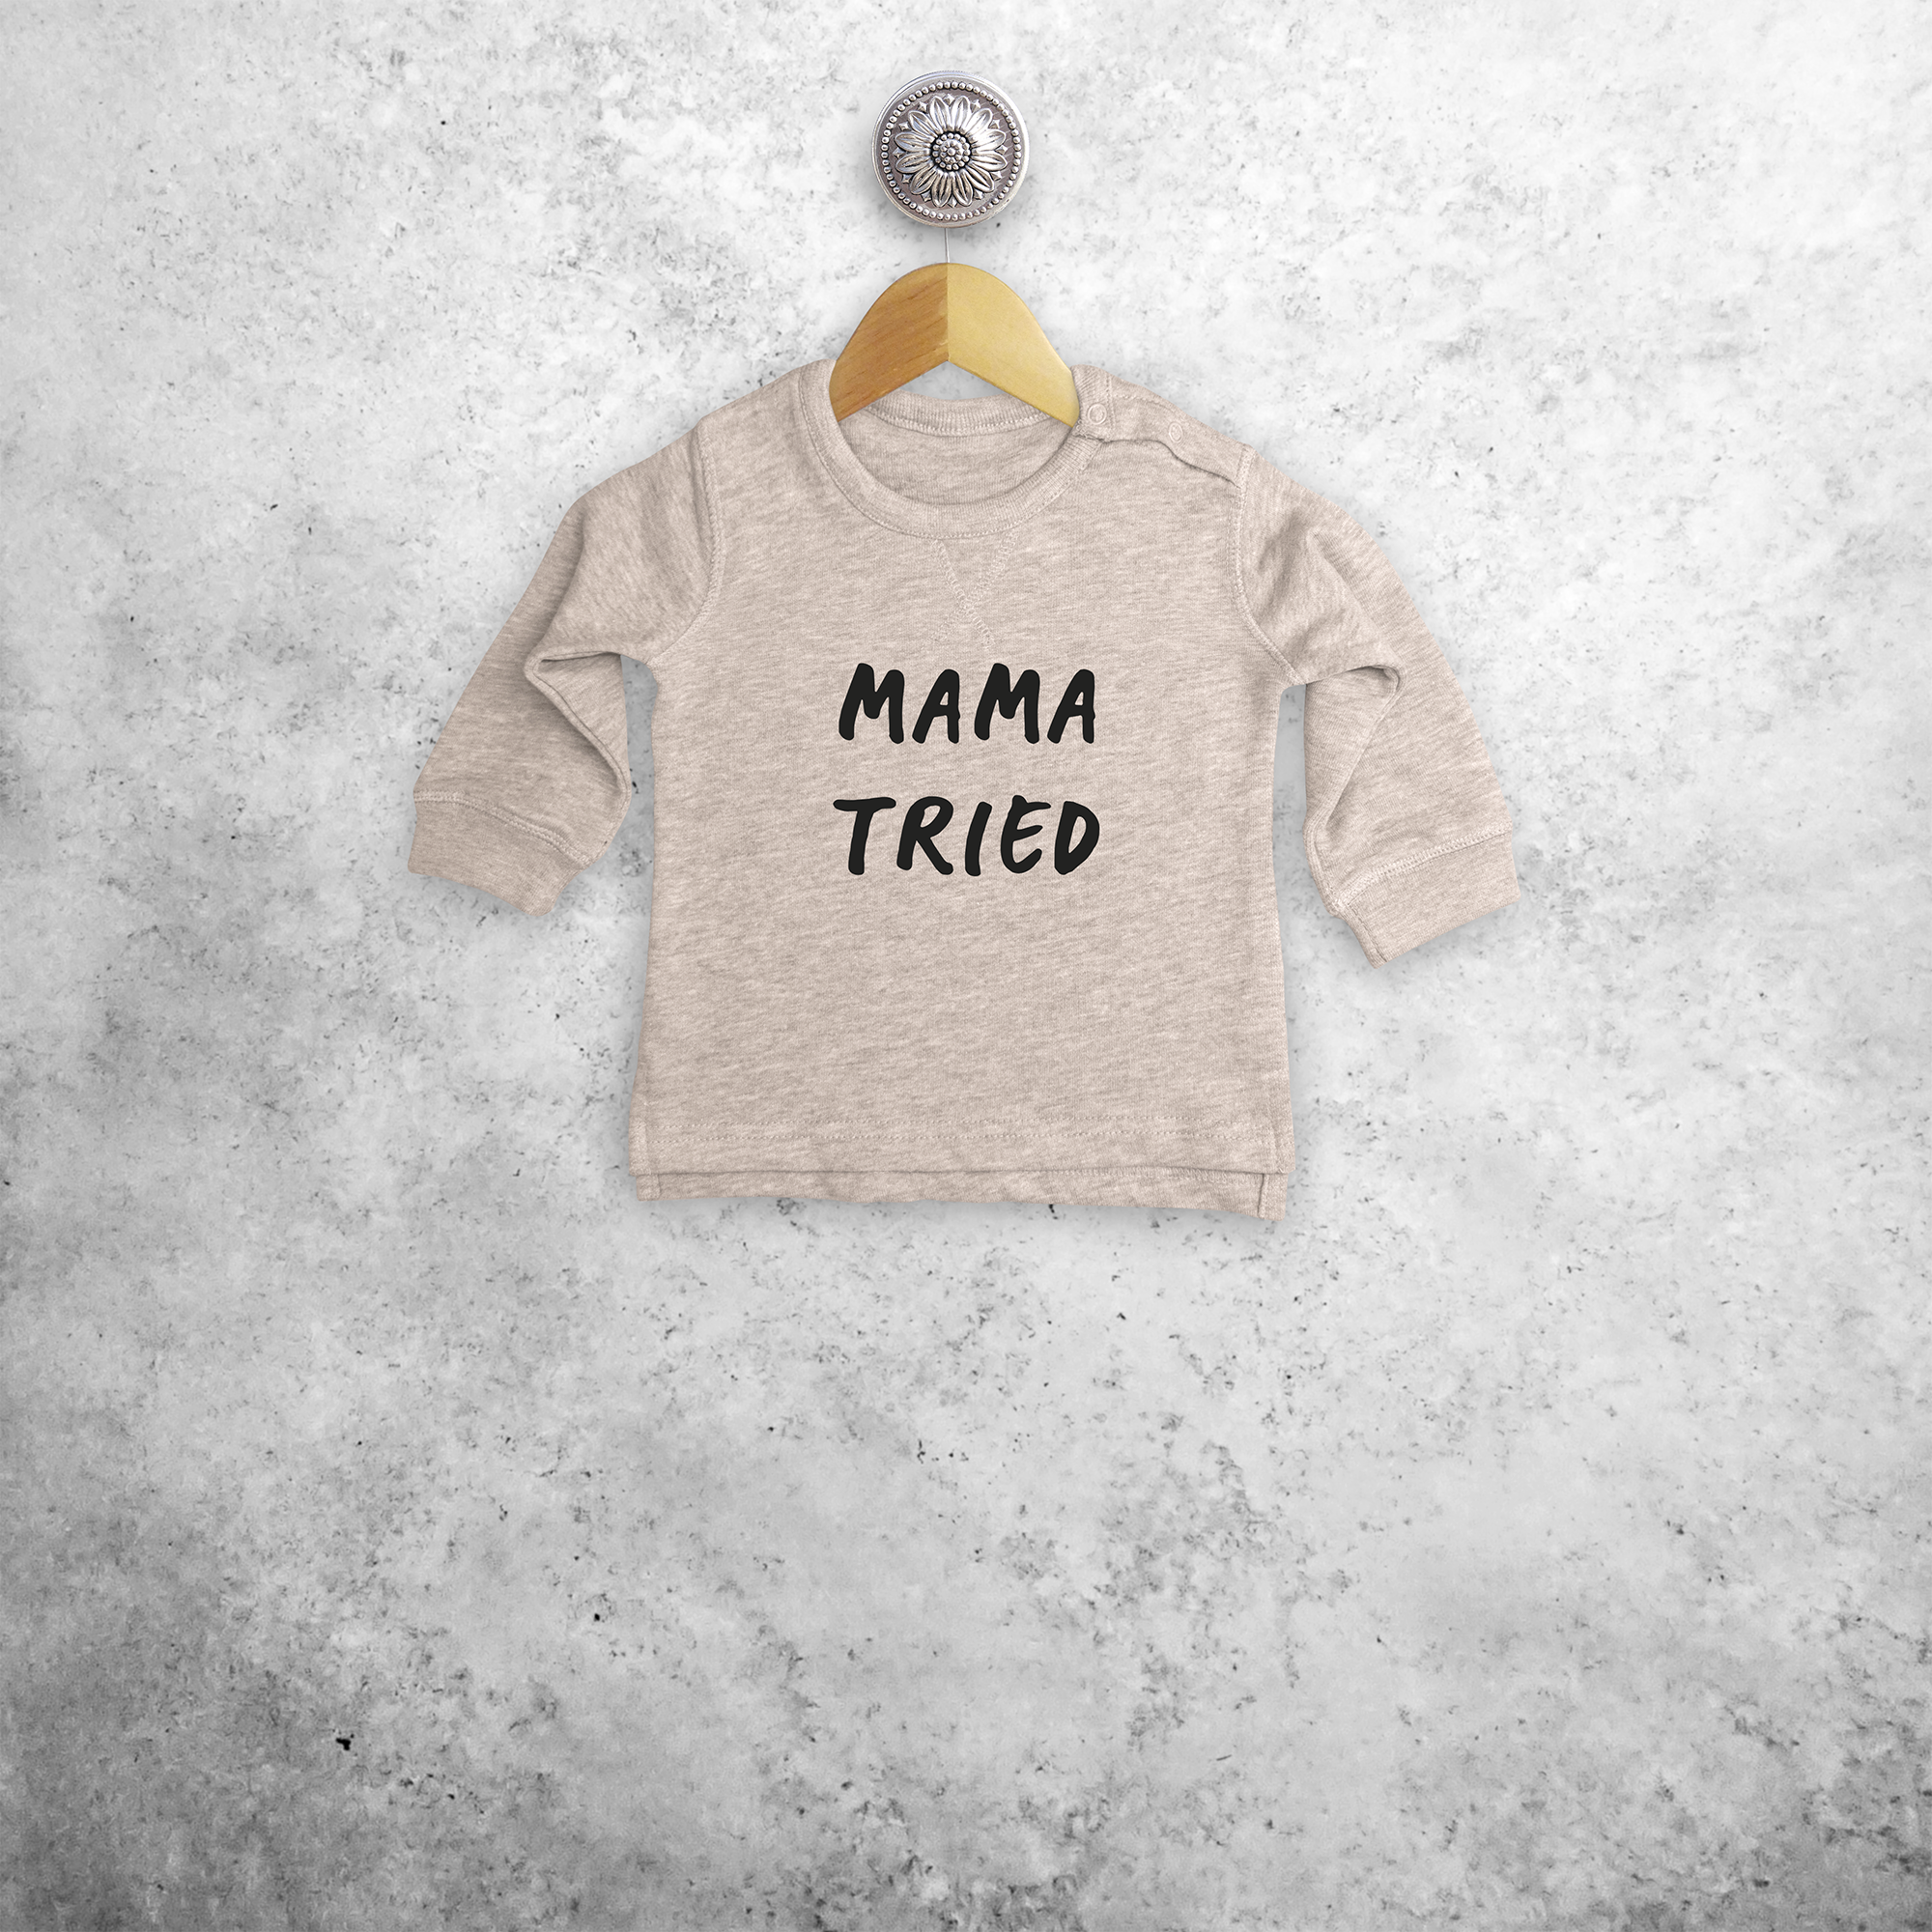 'Mama tried' baby trui